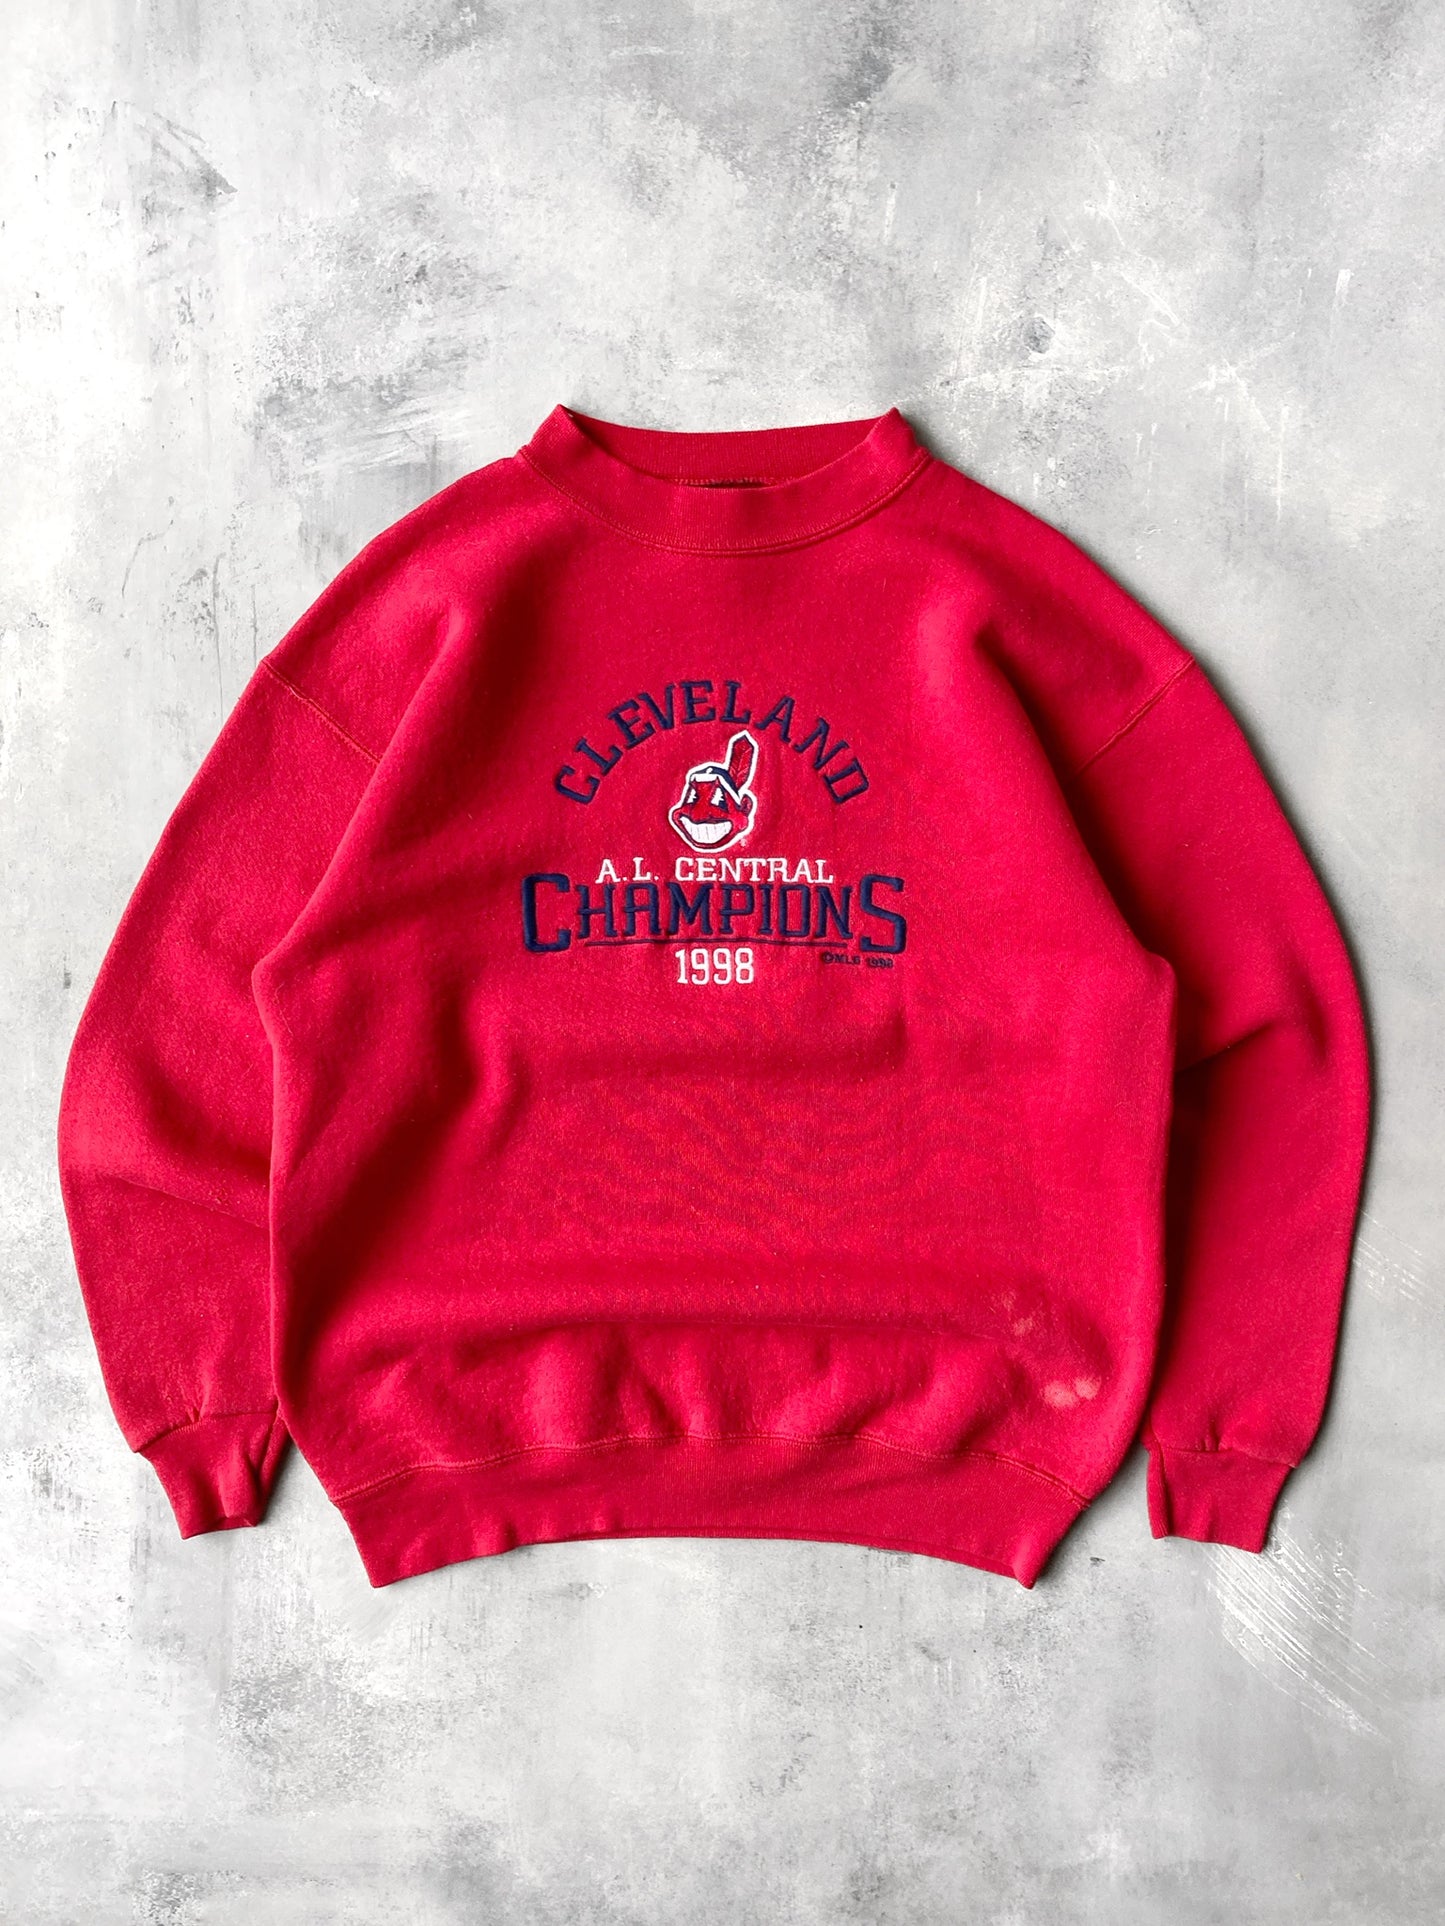 Cleveland Indians Sweatshirt '98 - Medium